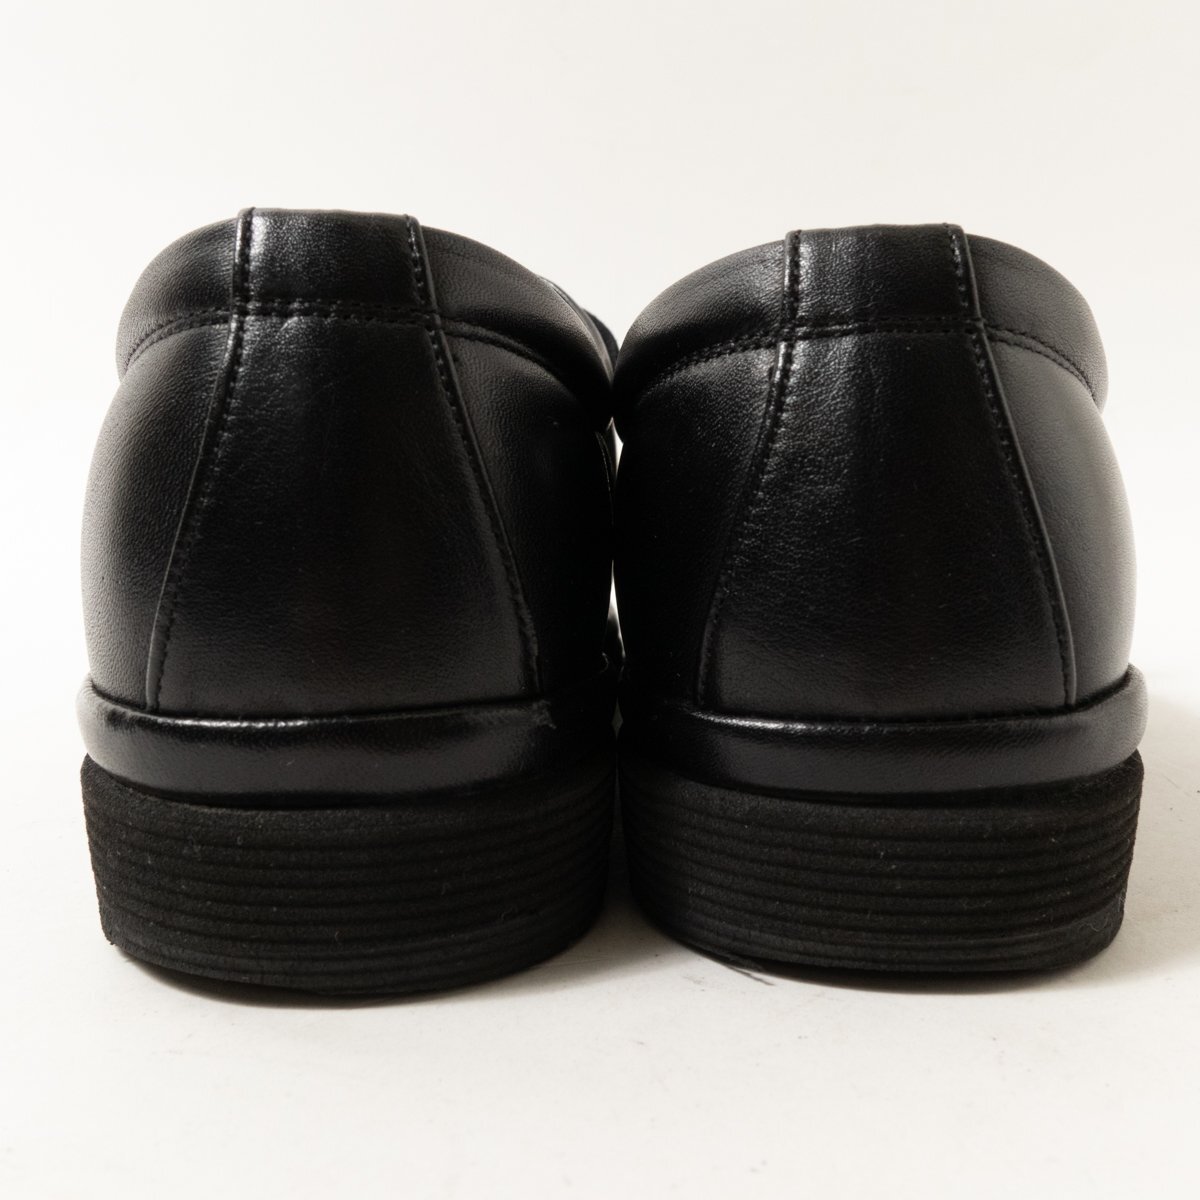 asics PEDALA Asics pedala walking shoes sport shoes 23.5cm leather black black series walk motion sport long distance travel woman 